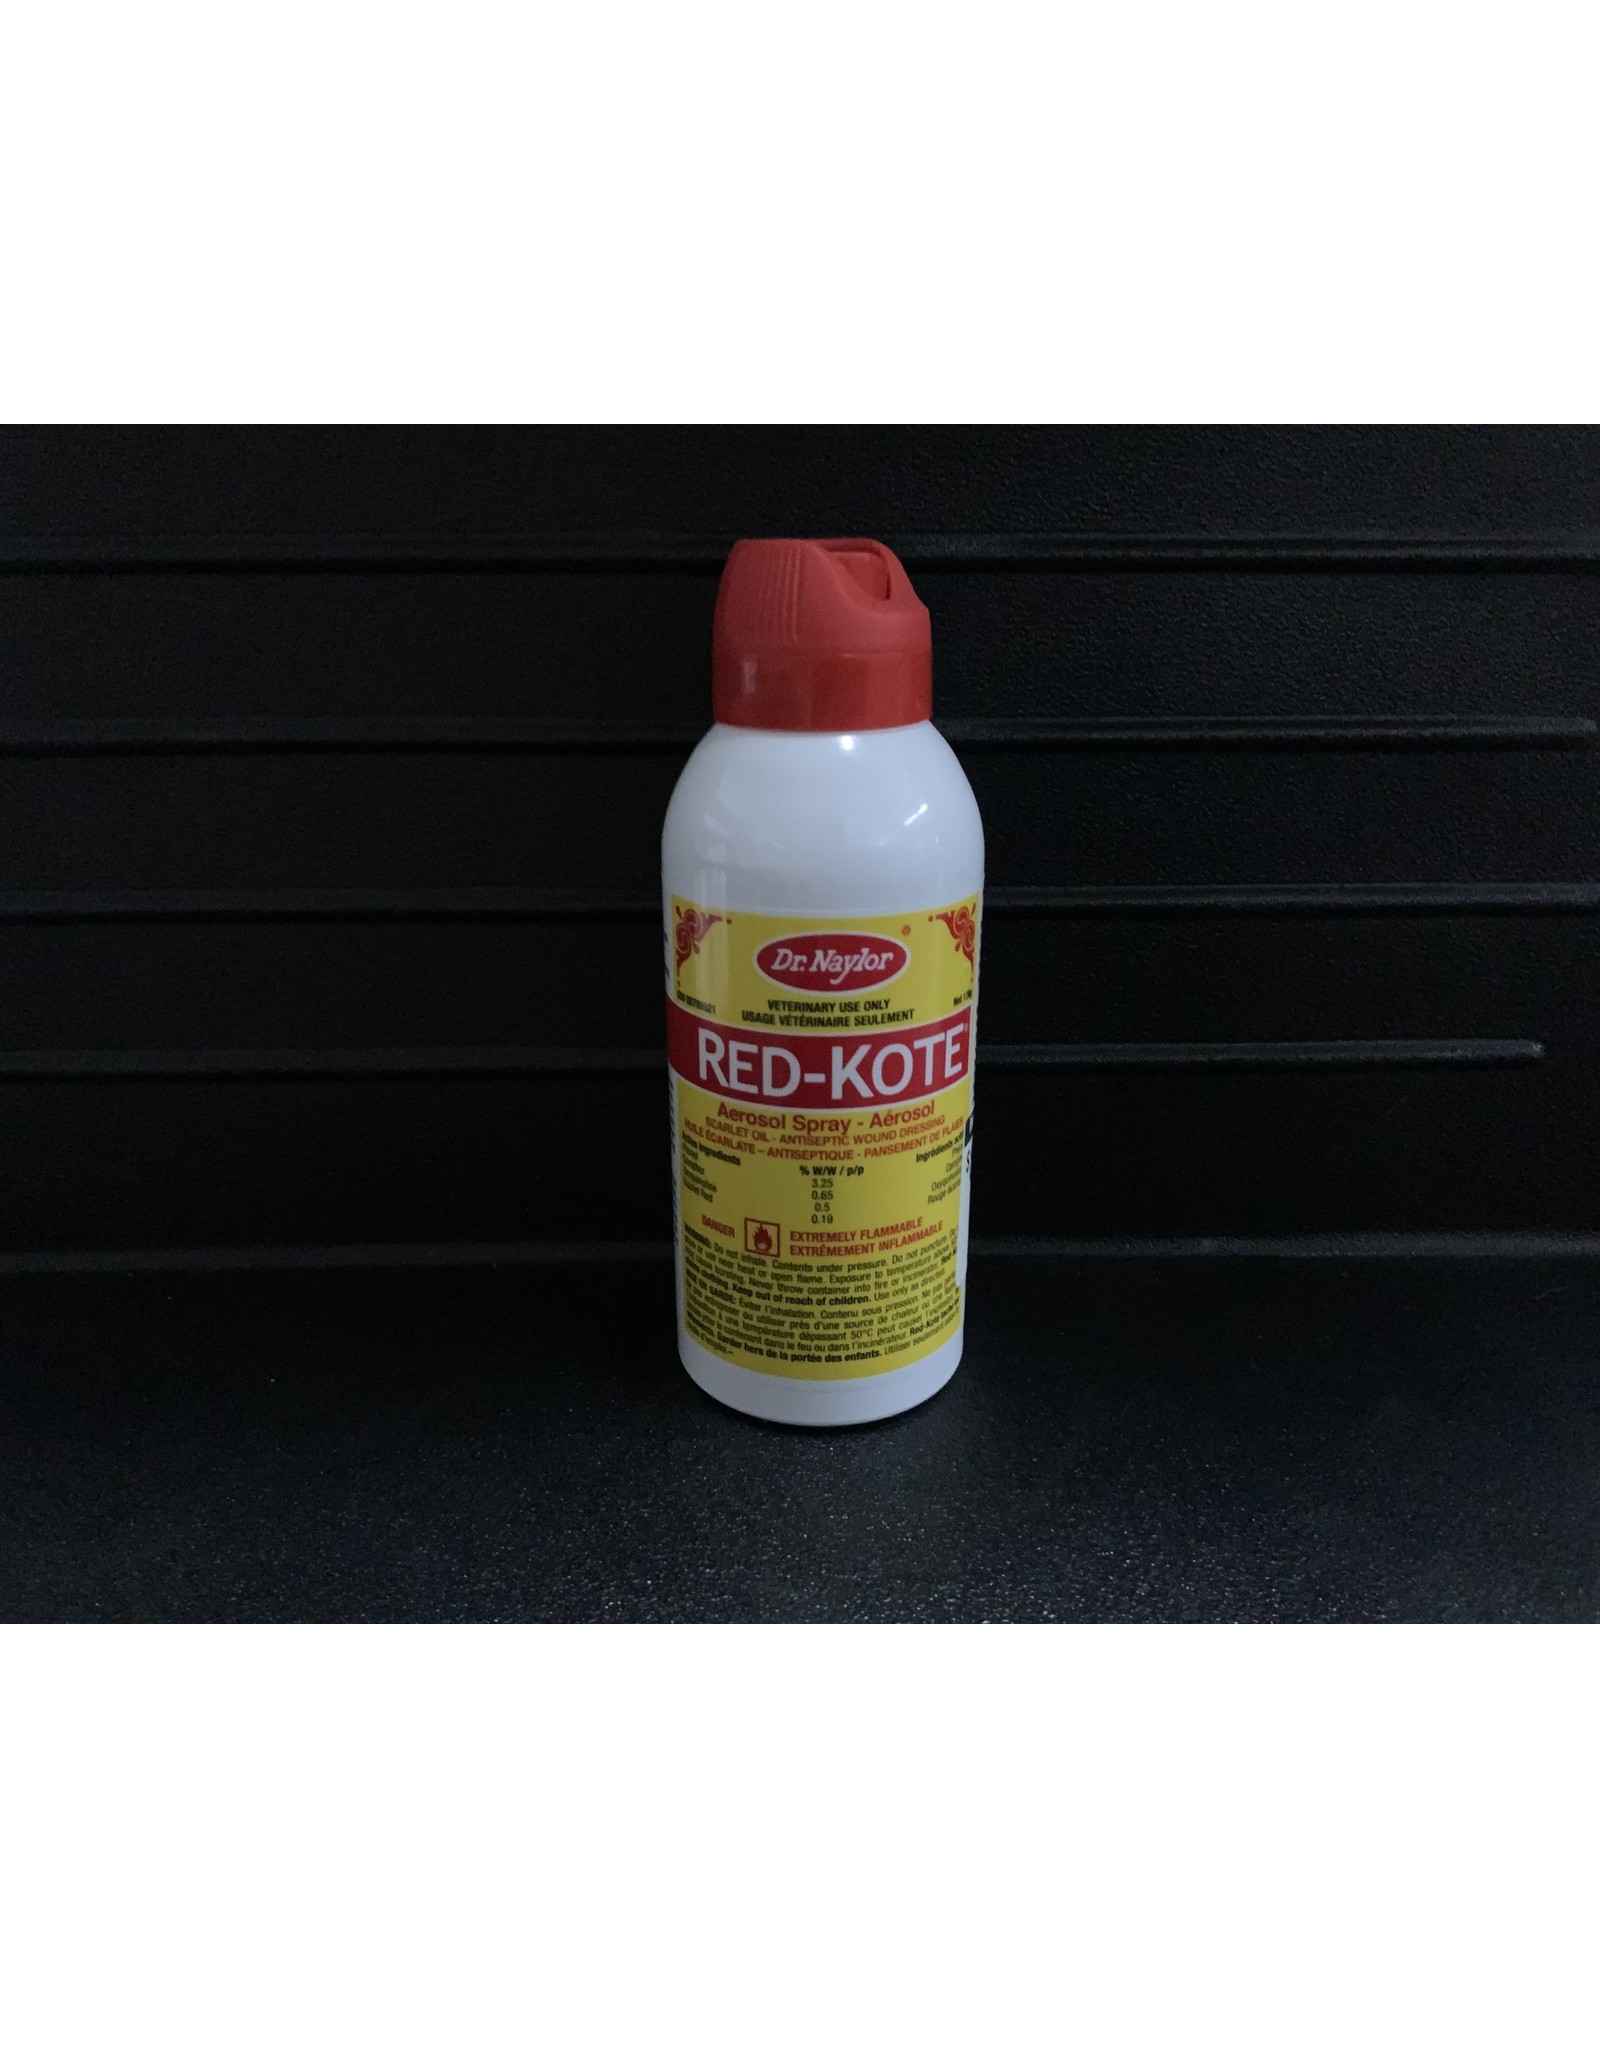 RED-KOTE Dr.Naylor Aerosol Spray 5oz  - 873-002  DIN: 00789321